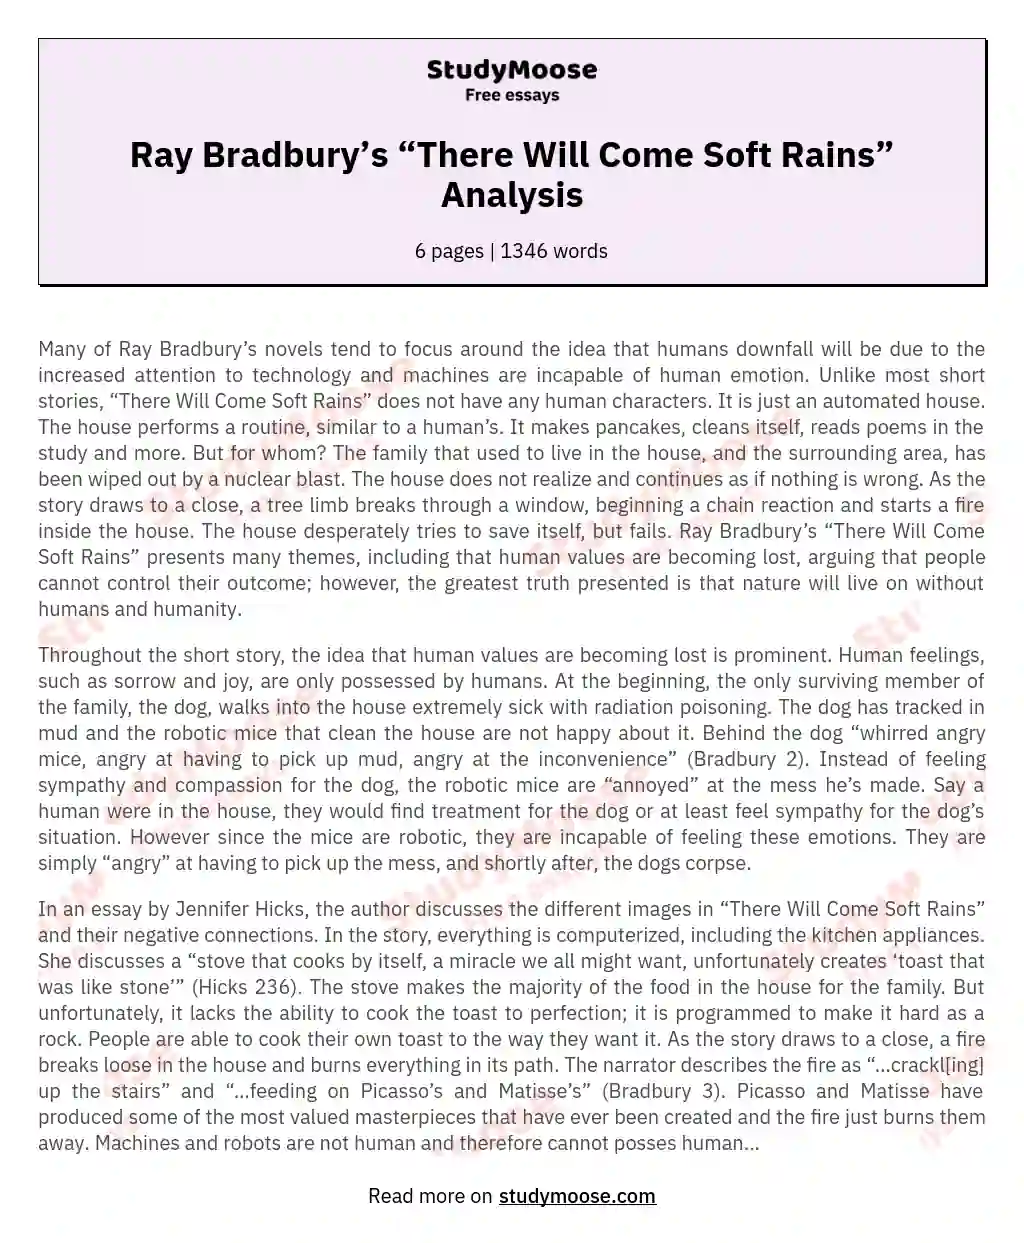 Ray Bradbury’s “There Will Come Soft Rains” Analysis essay